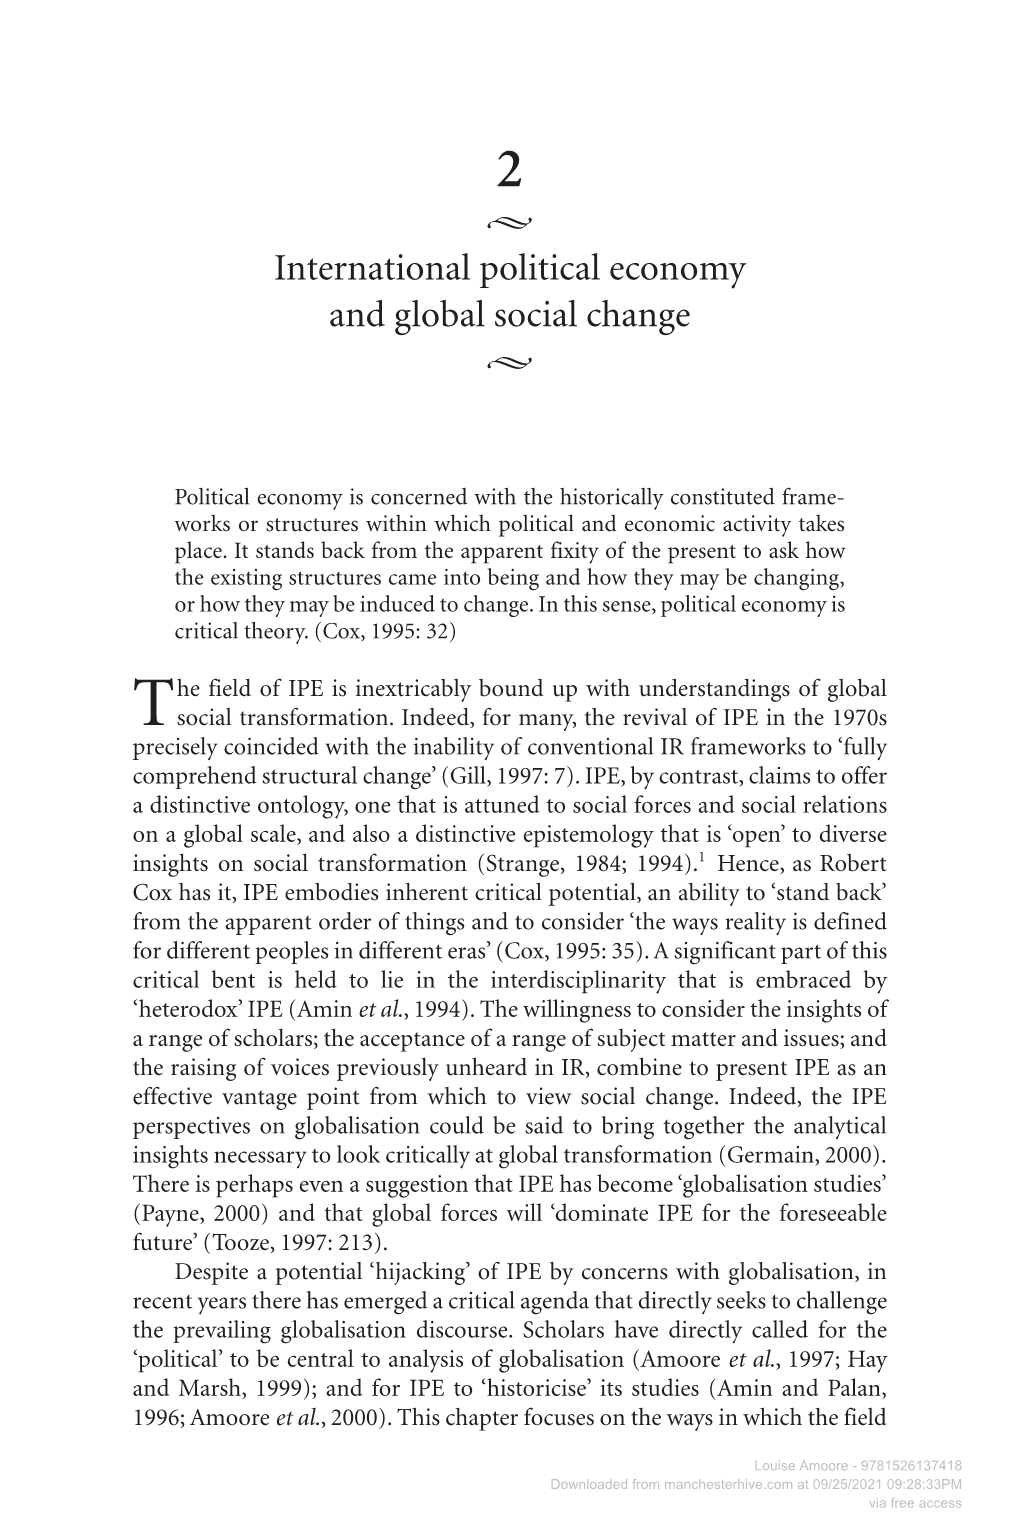 International Political Economy and Global Social Change 